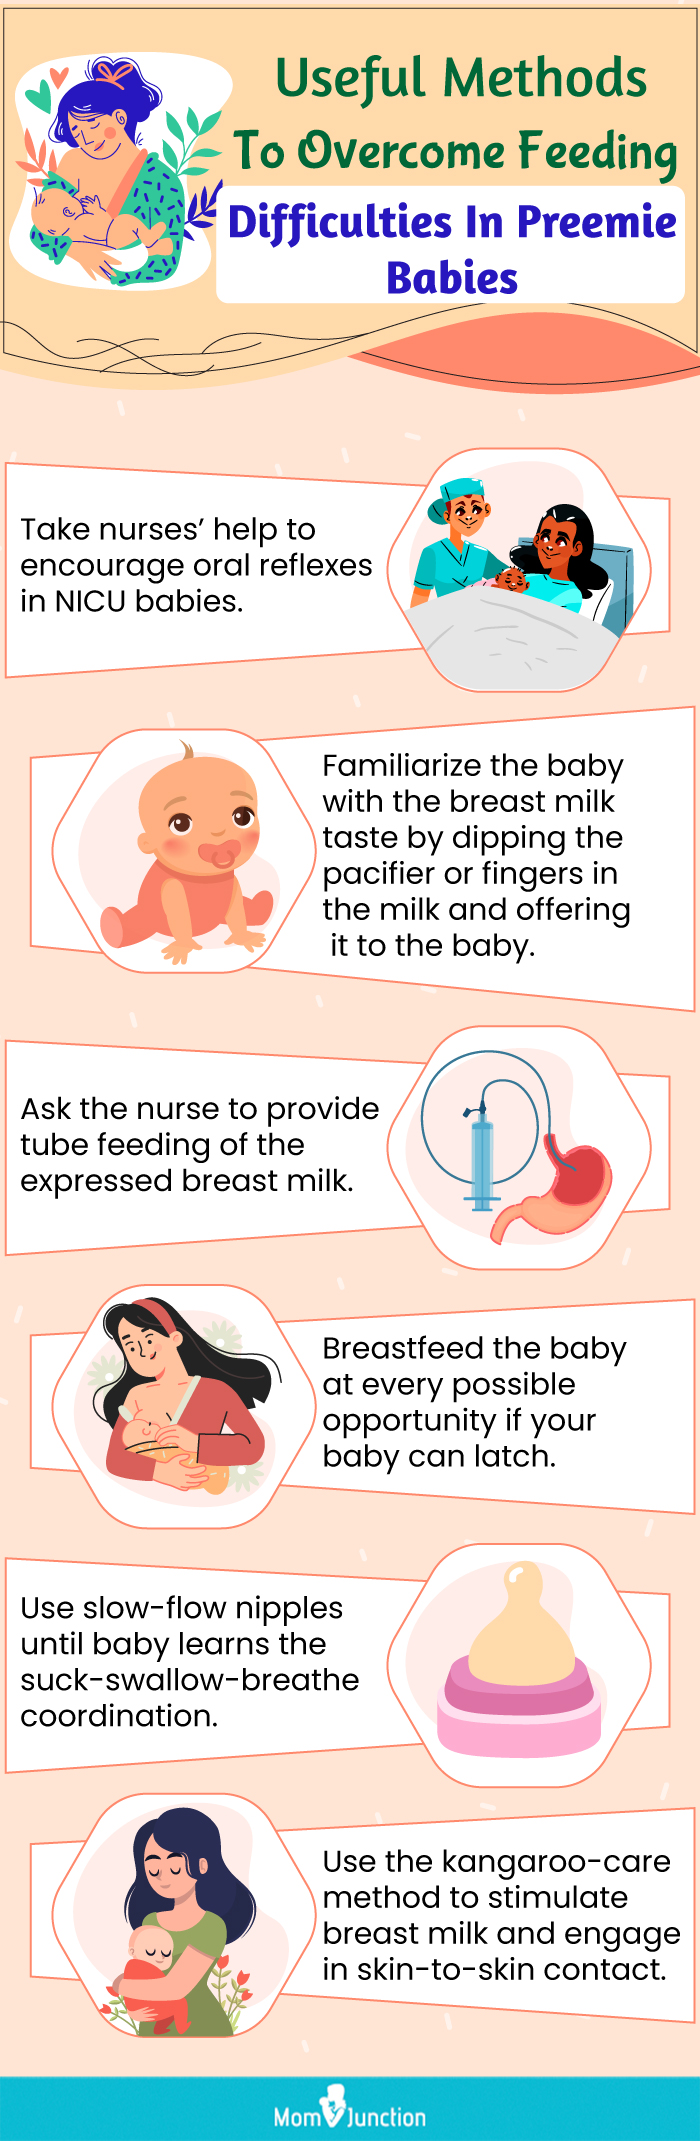 useful methods to overcome feeding difficulties in preemie babies (infographic)